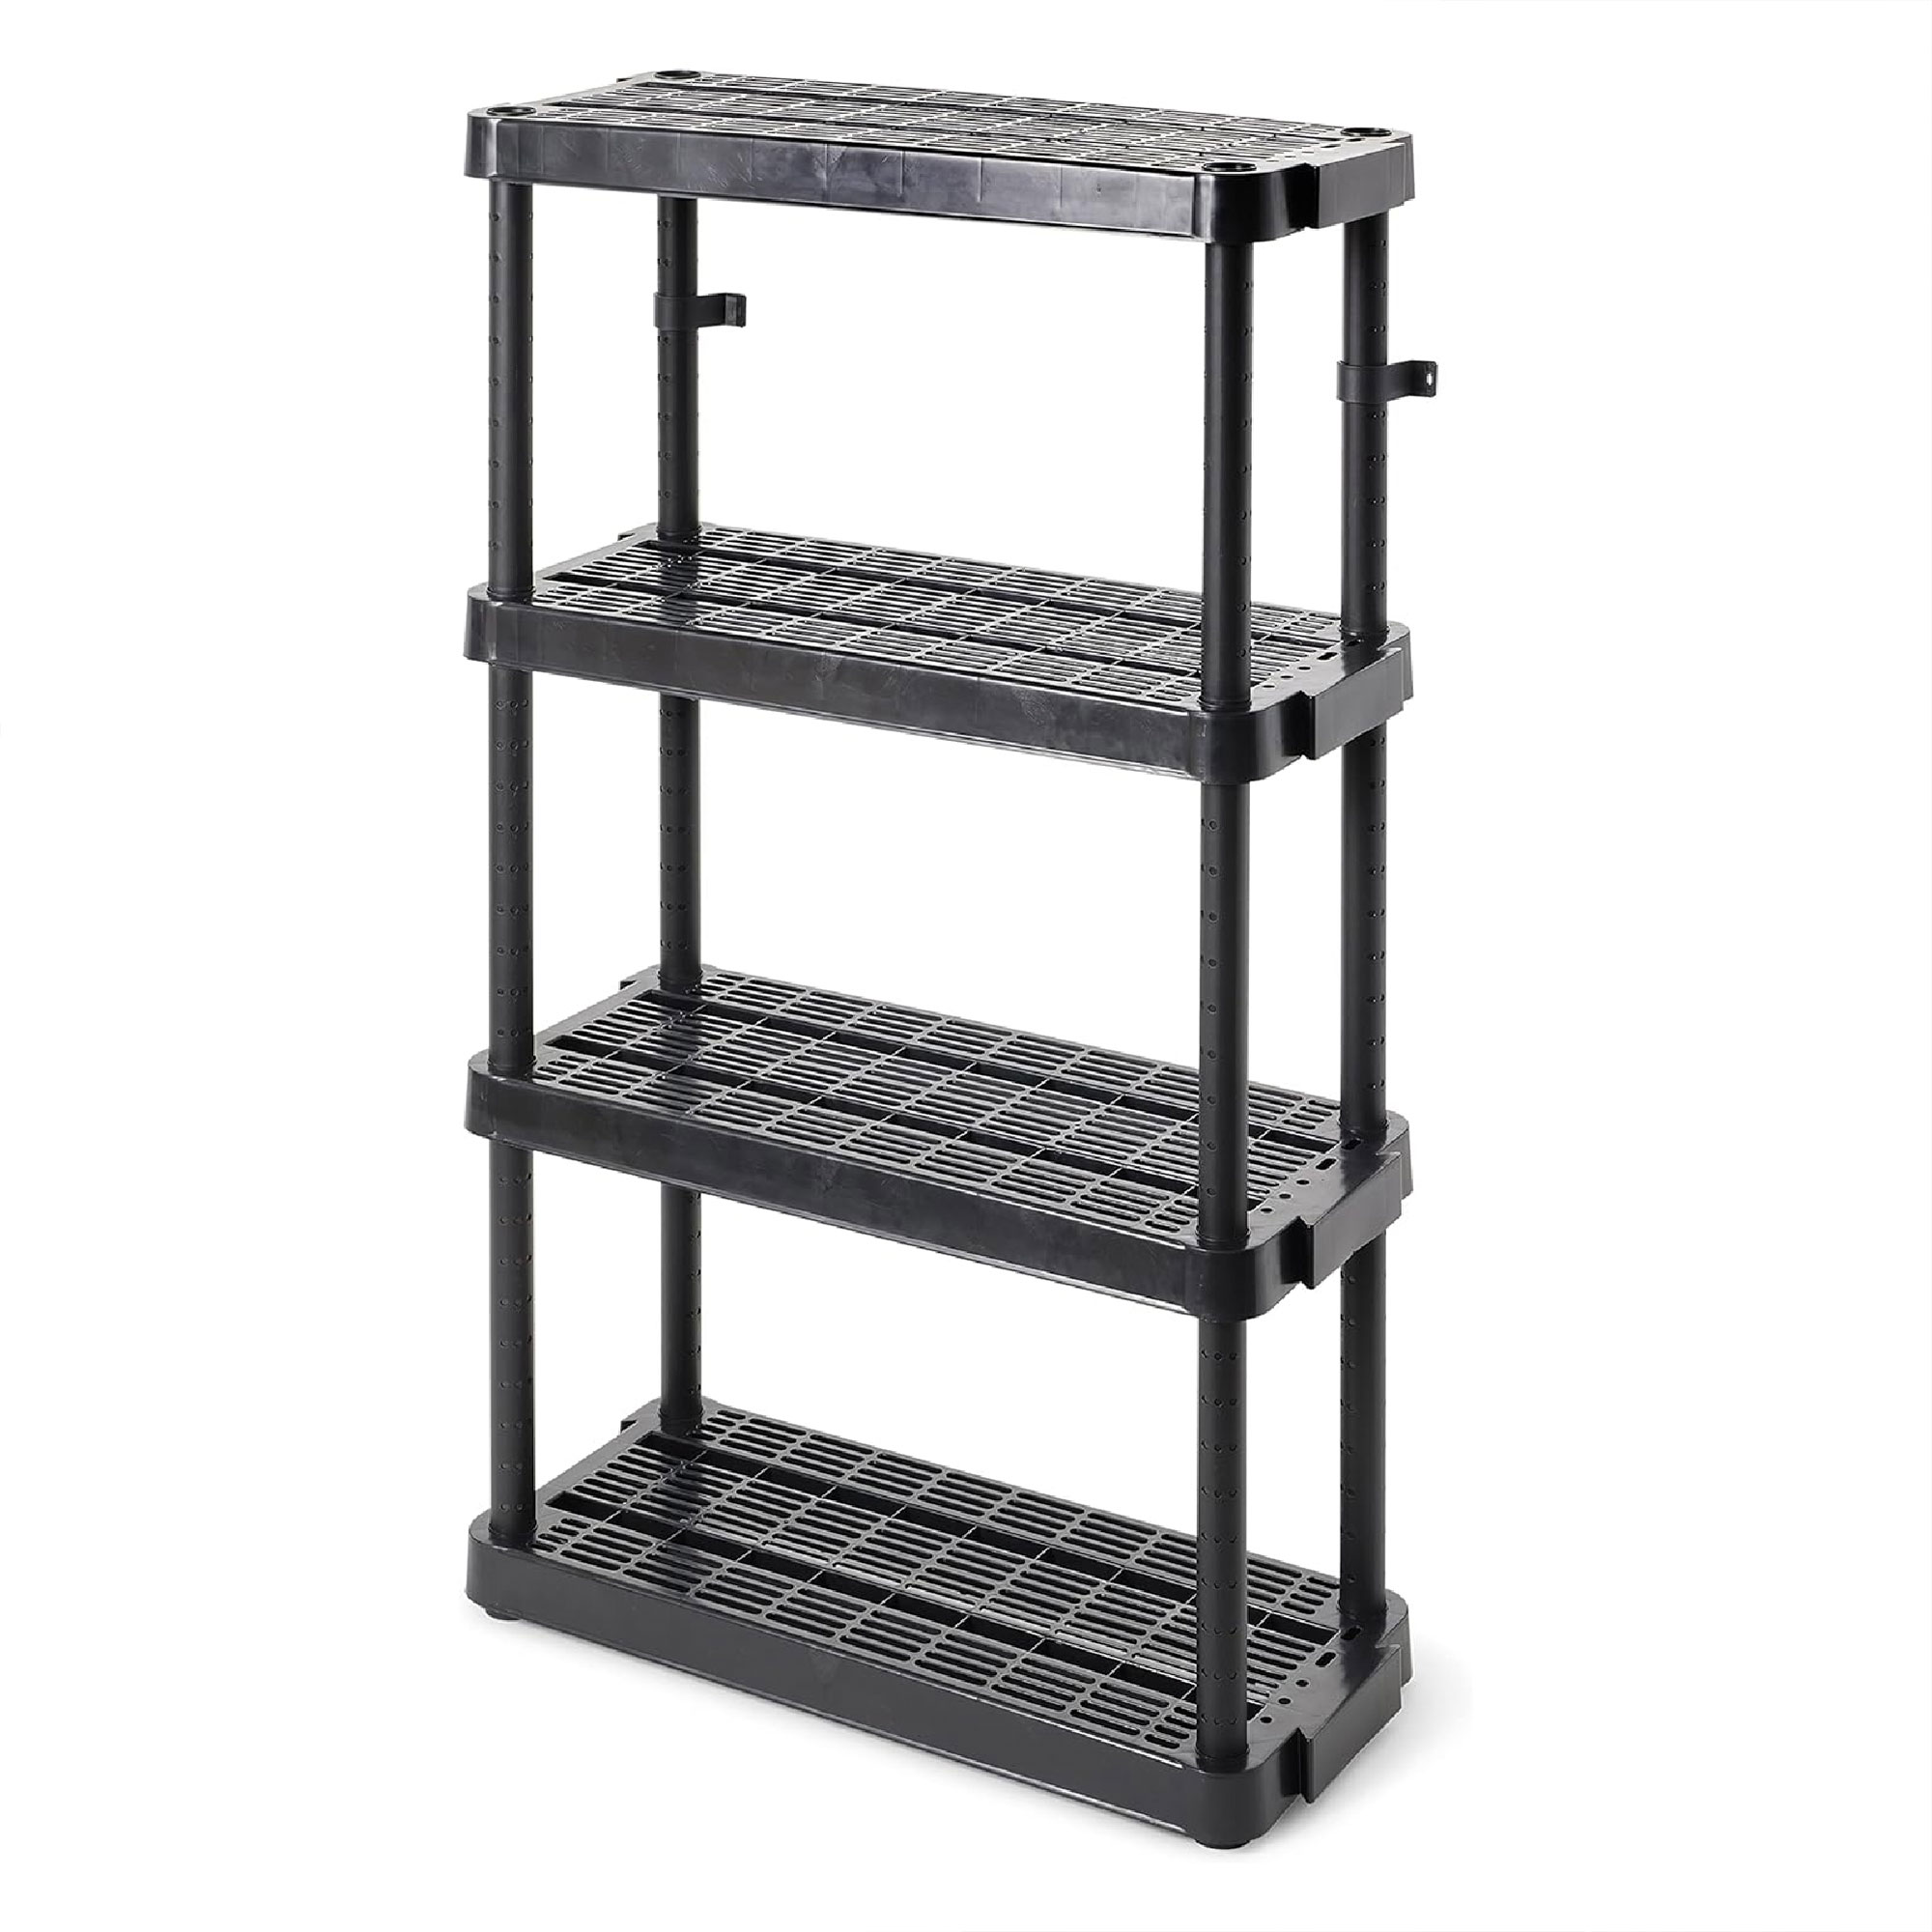 Gracious Living 4 Shelf Adjustable Height Ventilated Storage Unit, Black - image 1 of 12